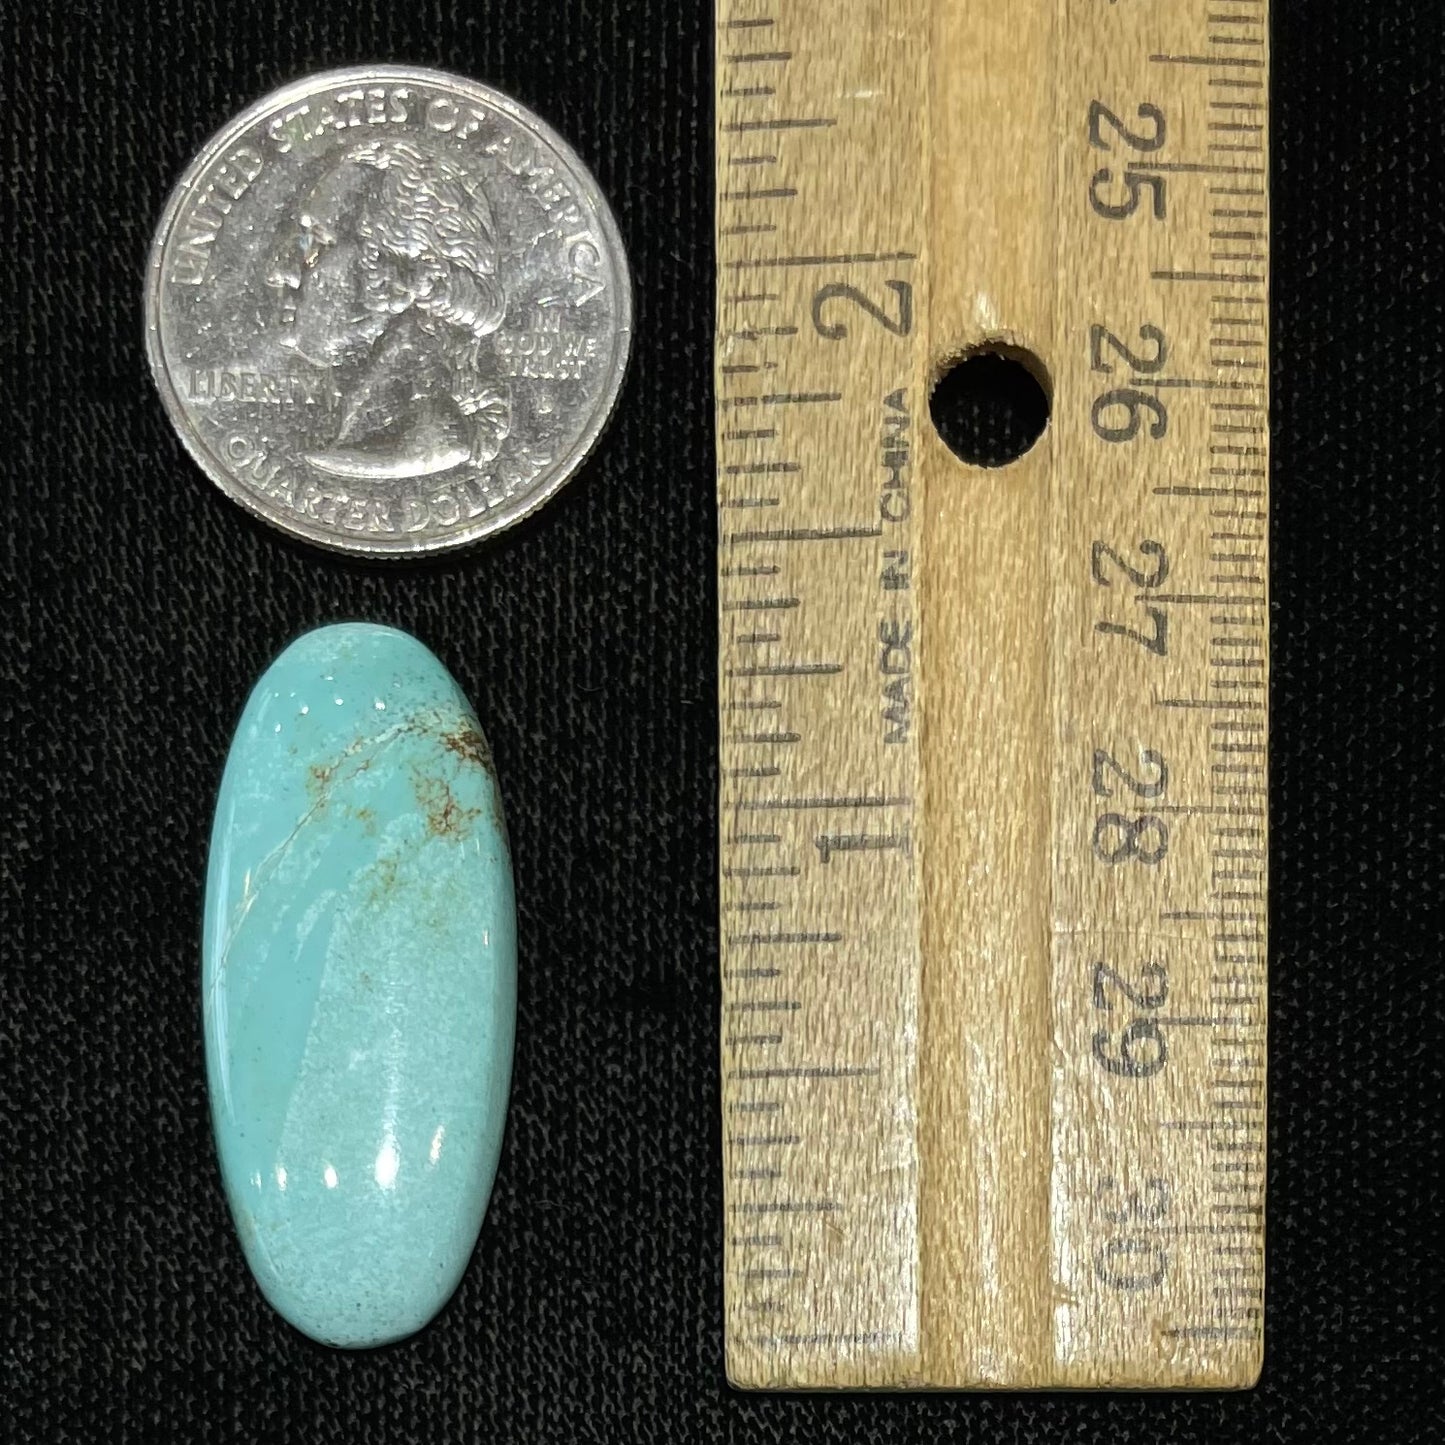 A loose, light blue, oval cabochon cut turquoise stone from Sleeping Beauty Mine, Arizona.